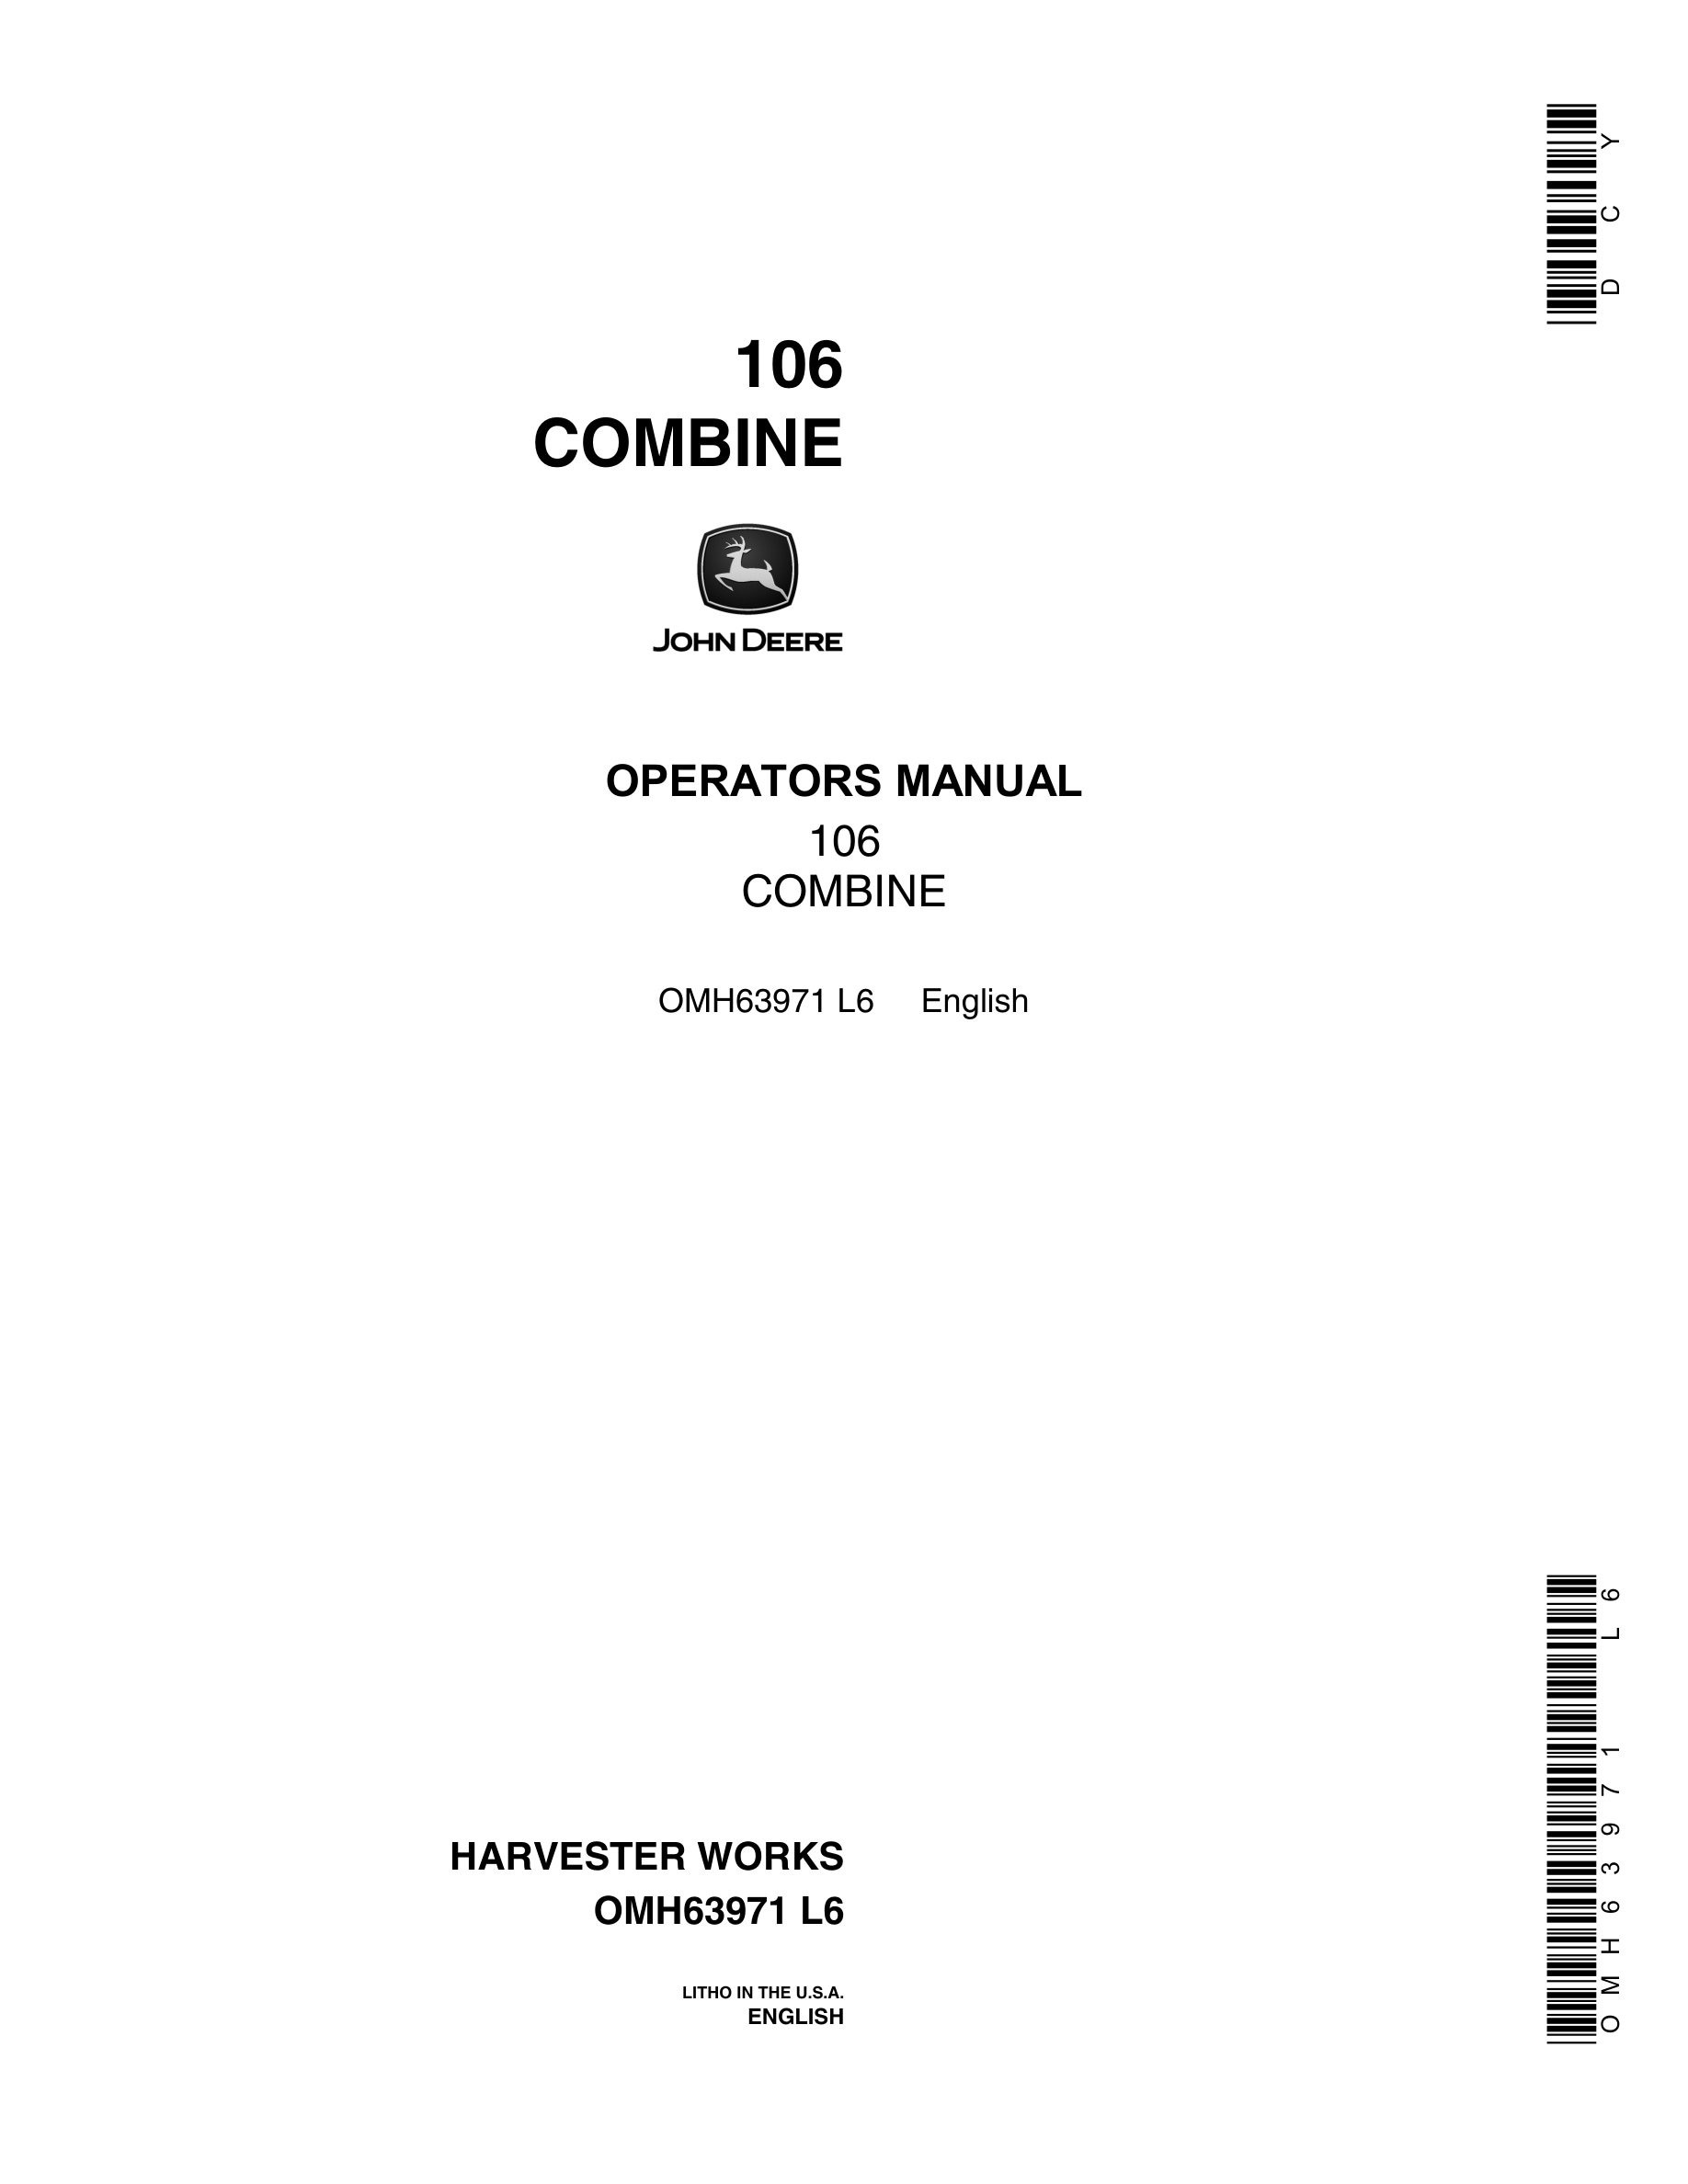 John Deere 106 Combine Operator Manual OMH63971-1